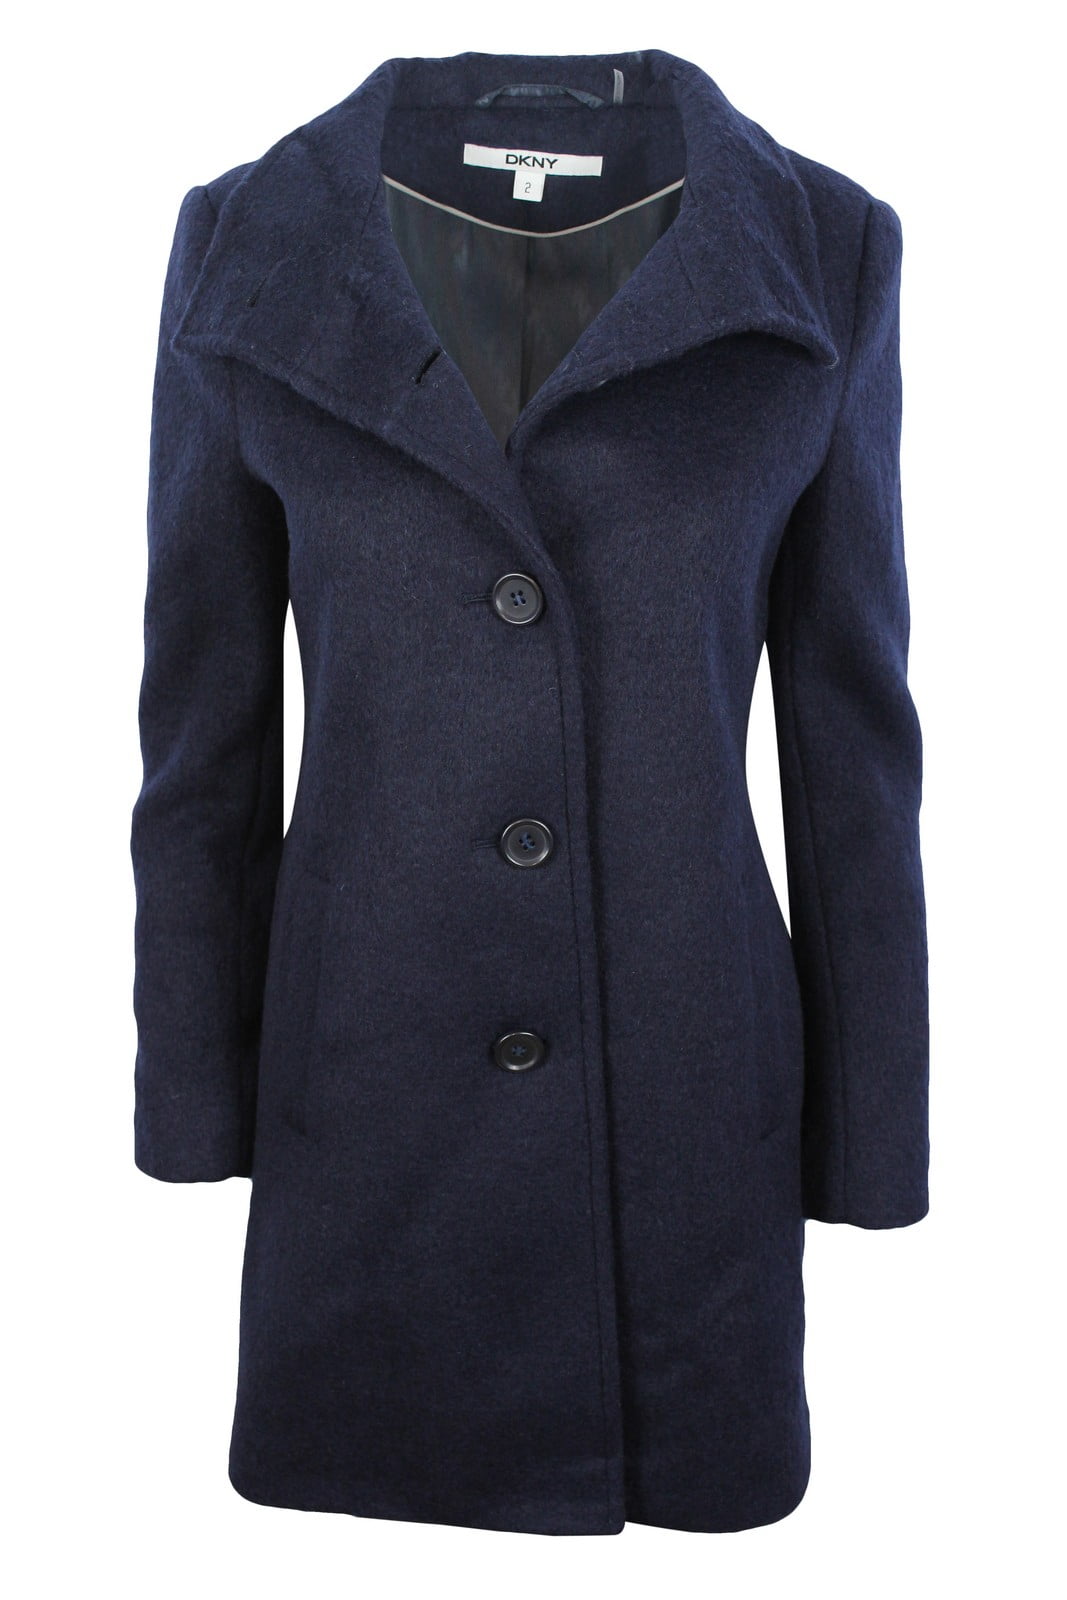 DKNY - DKNY Women's Navy Blue Warm Wool Blend Fitted Funnel Collar Coat ...